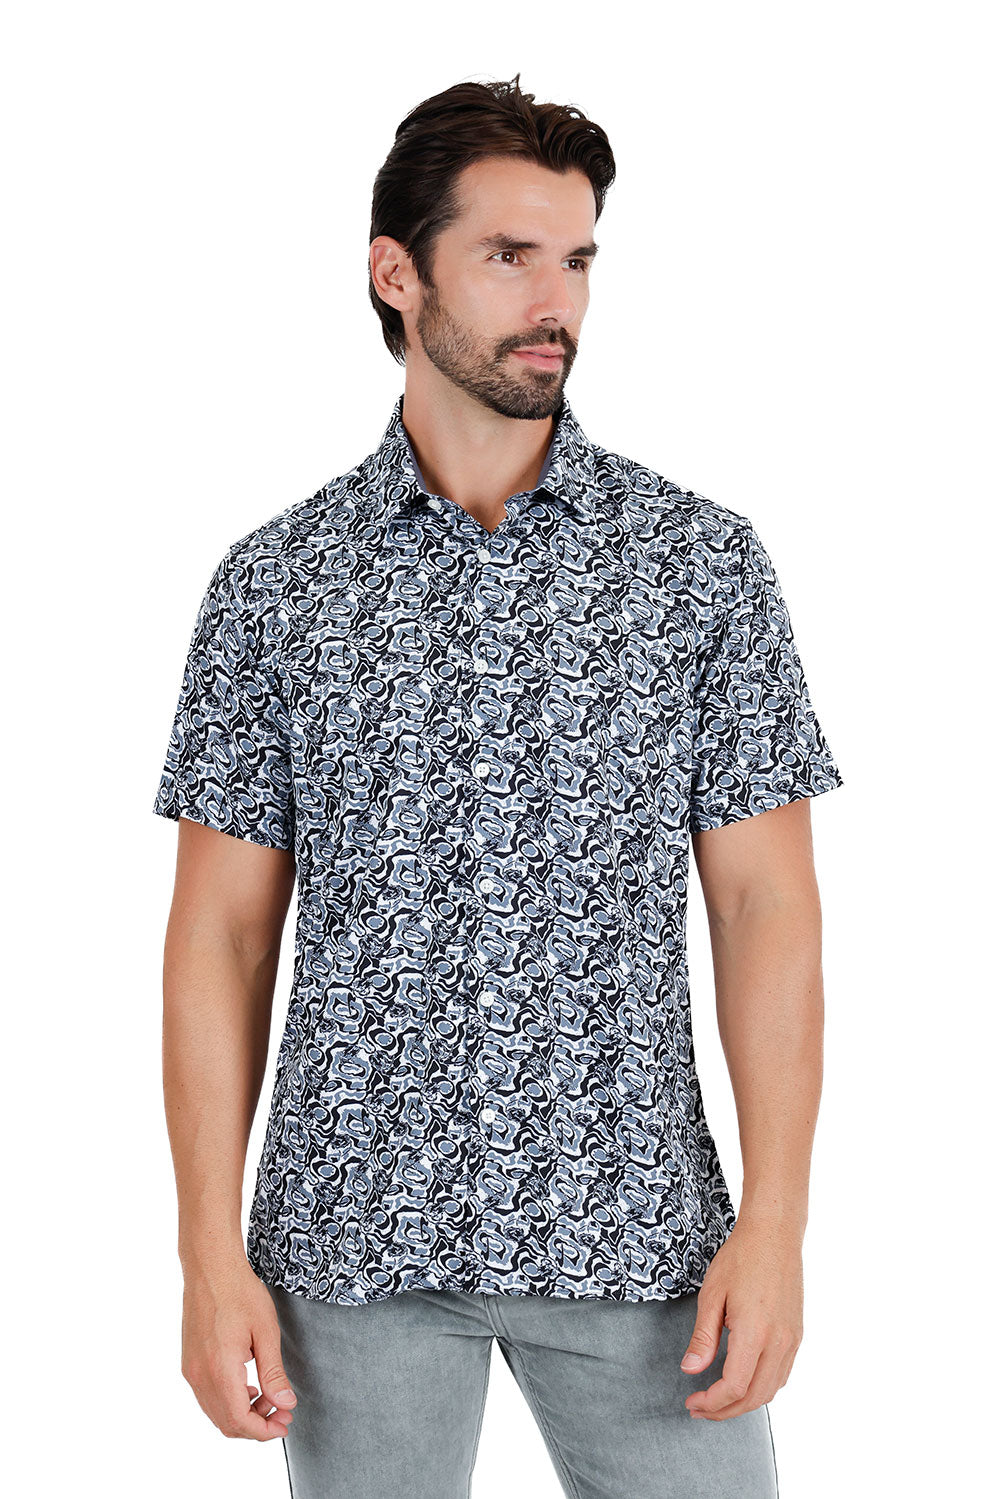 Vassari Men's Printed Geometric Design Short Sleeve Shirts 3VSS05